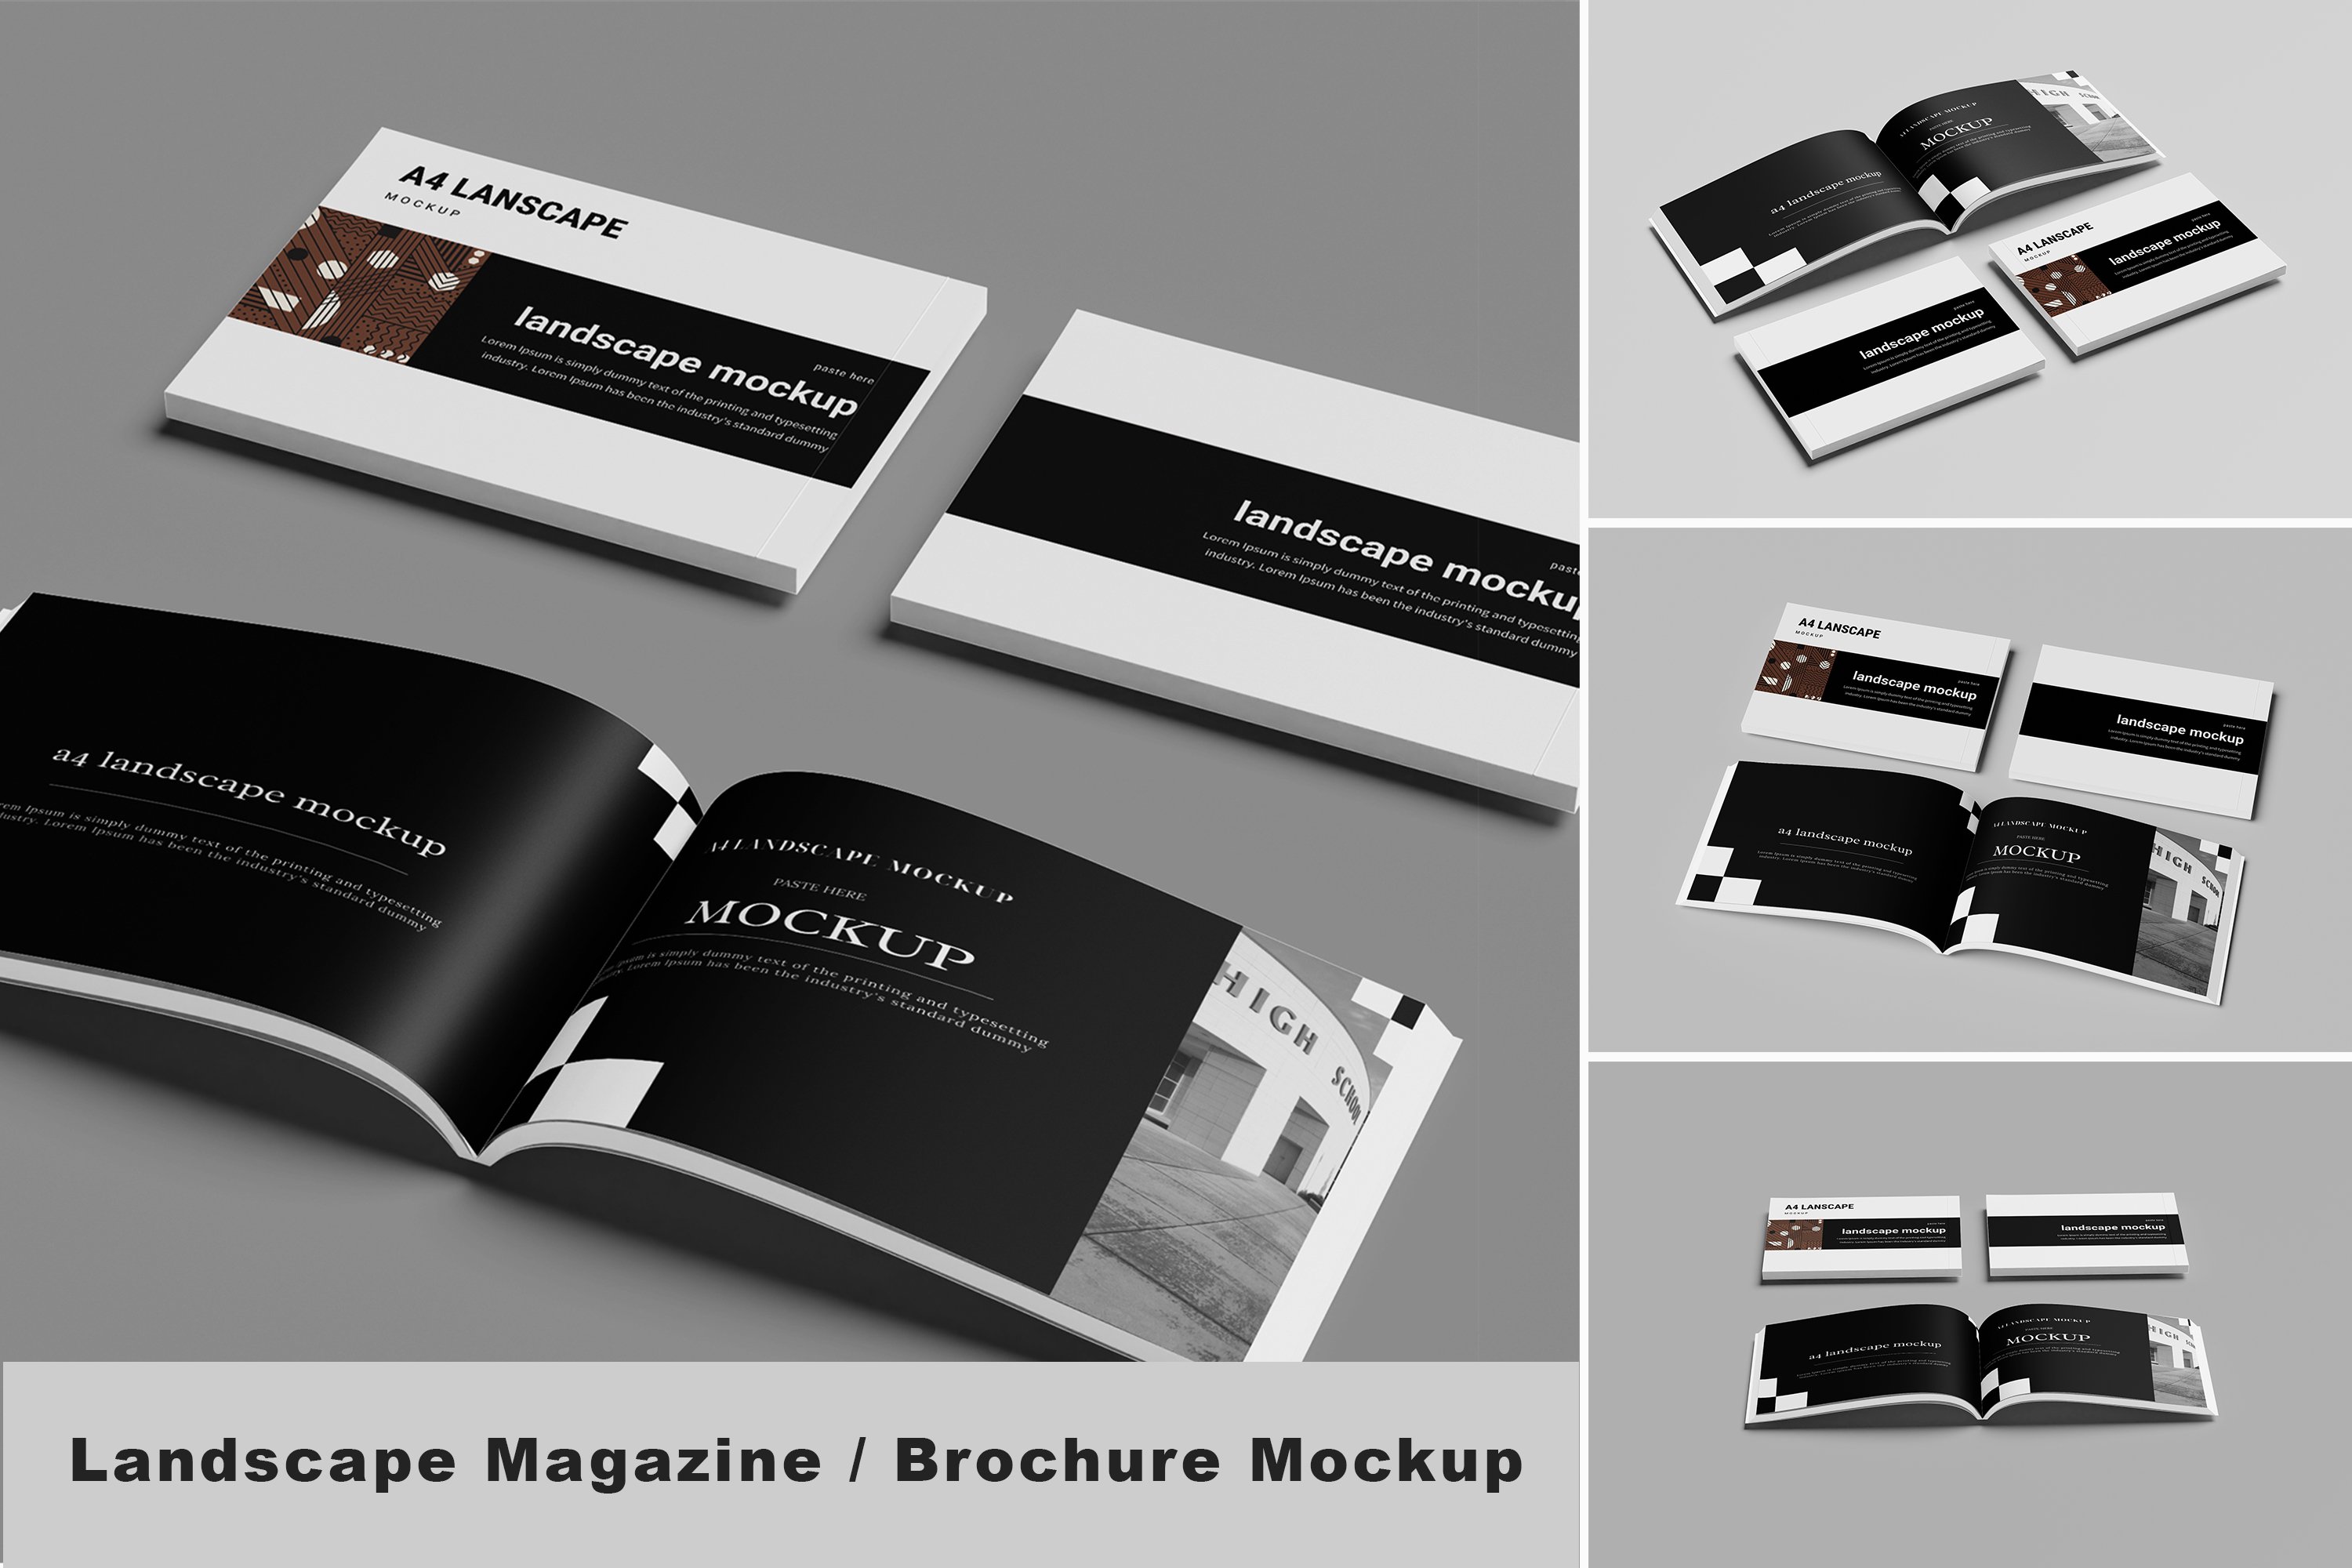 Landscape Magazine / Brochure Mockup cover image.